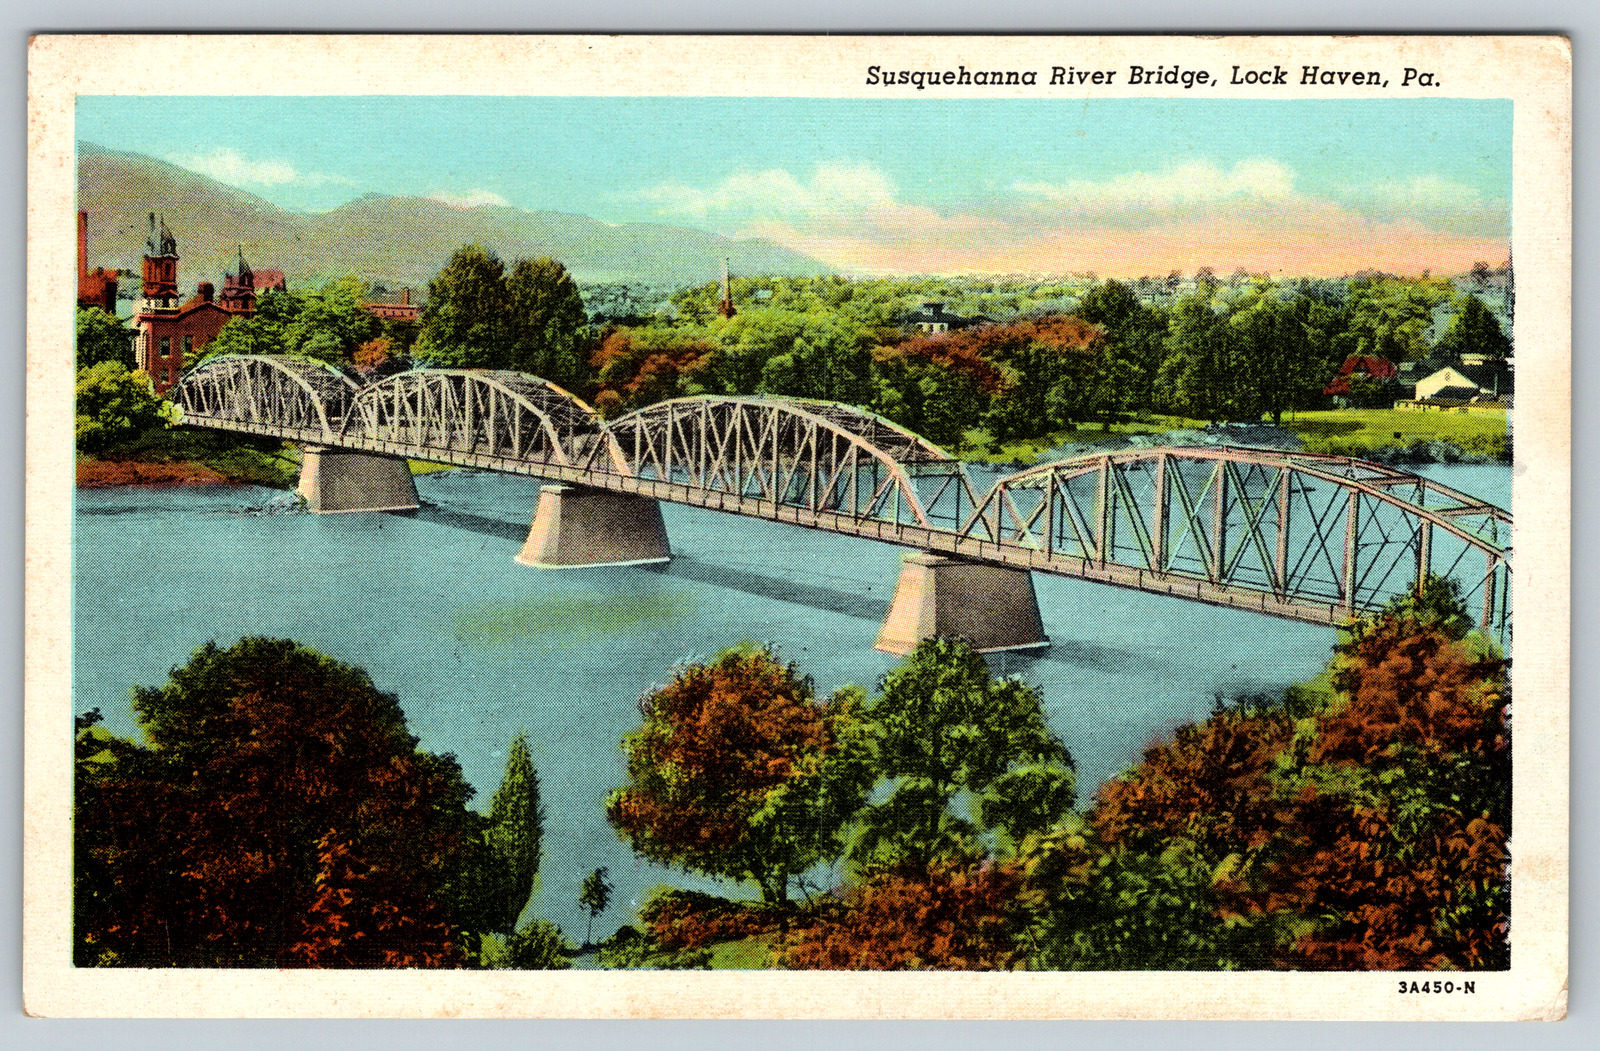 Susquehanna River Bridge Lock Haven Off Pa. U.S. Art c1940s Vintage Postcard